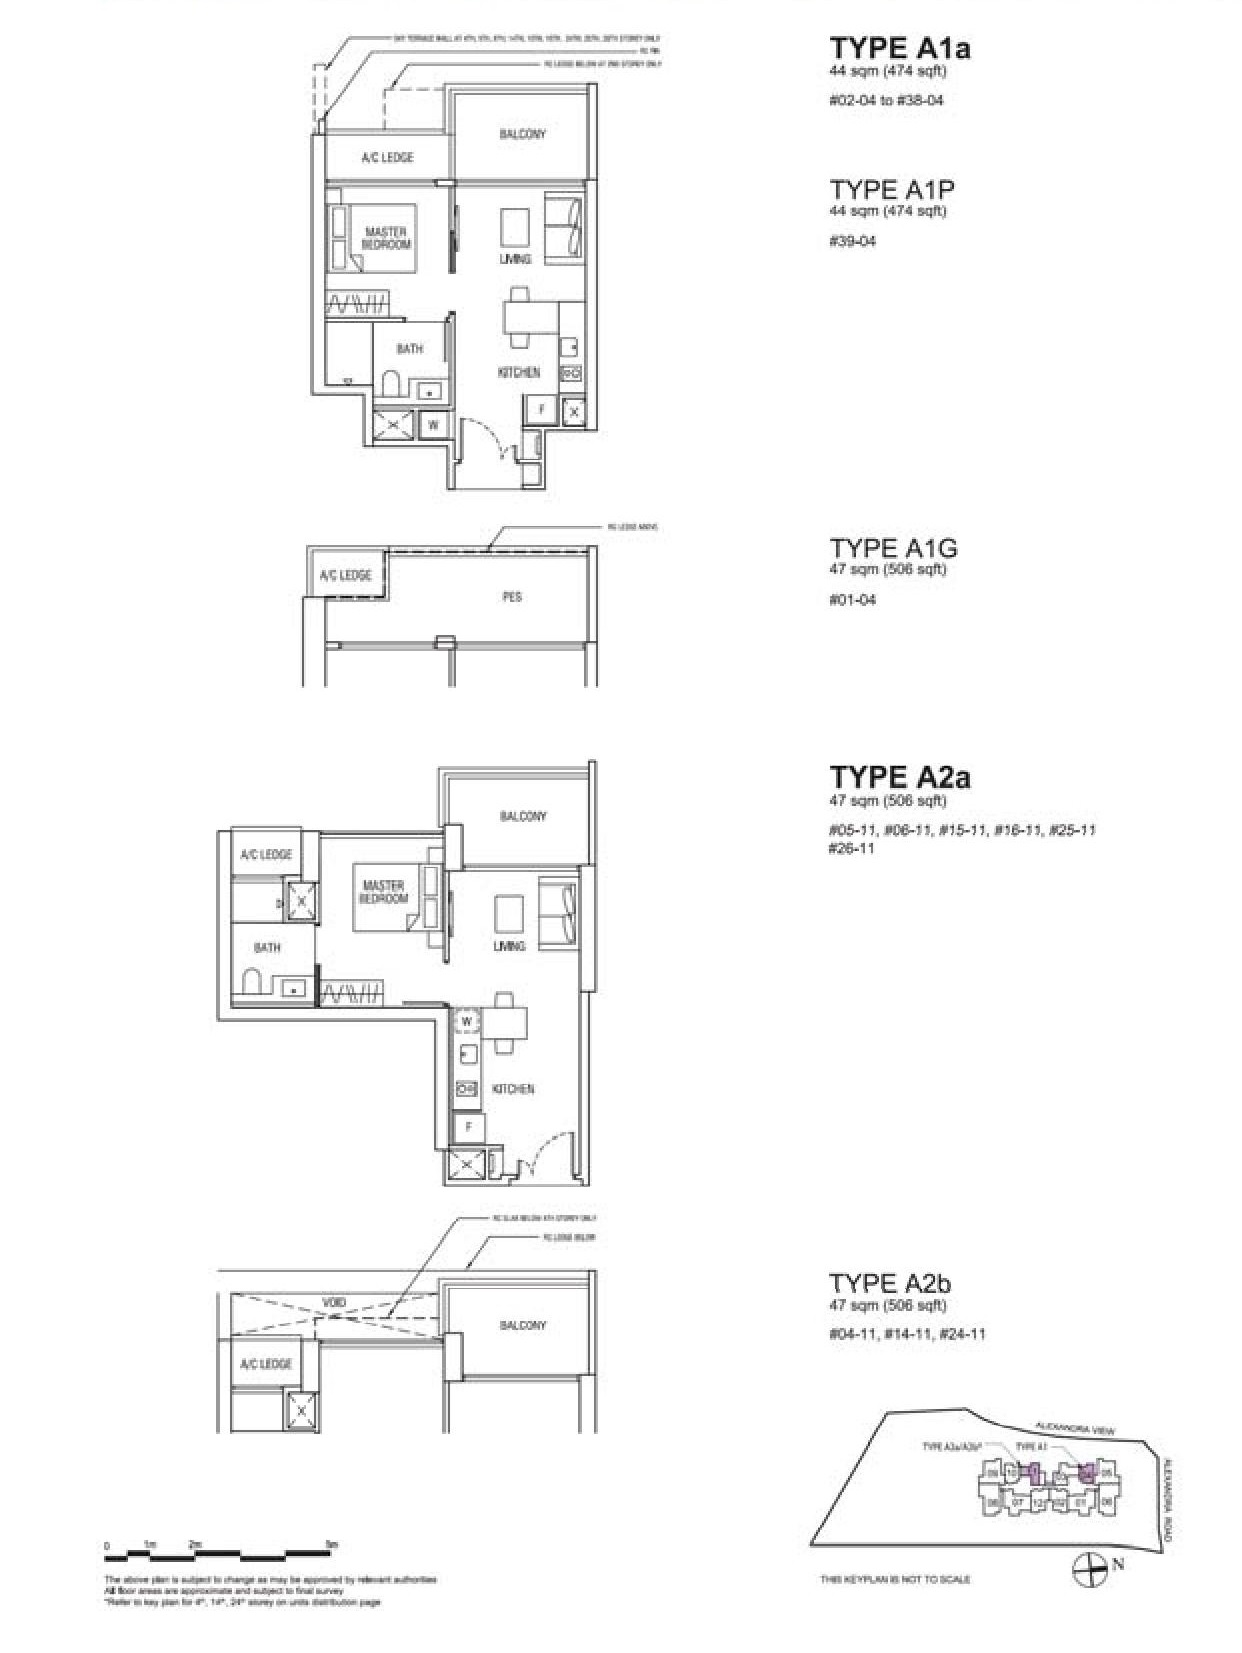 Alex Residences 1 Bedroom Type A1, A1P, A1G, A2a, A2b Floor Plans